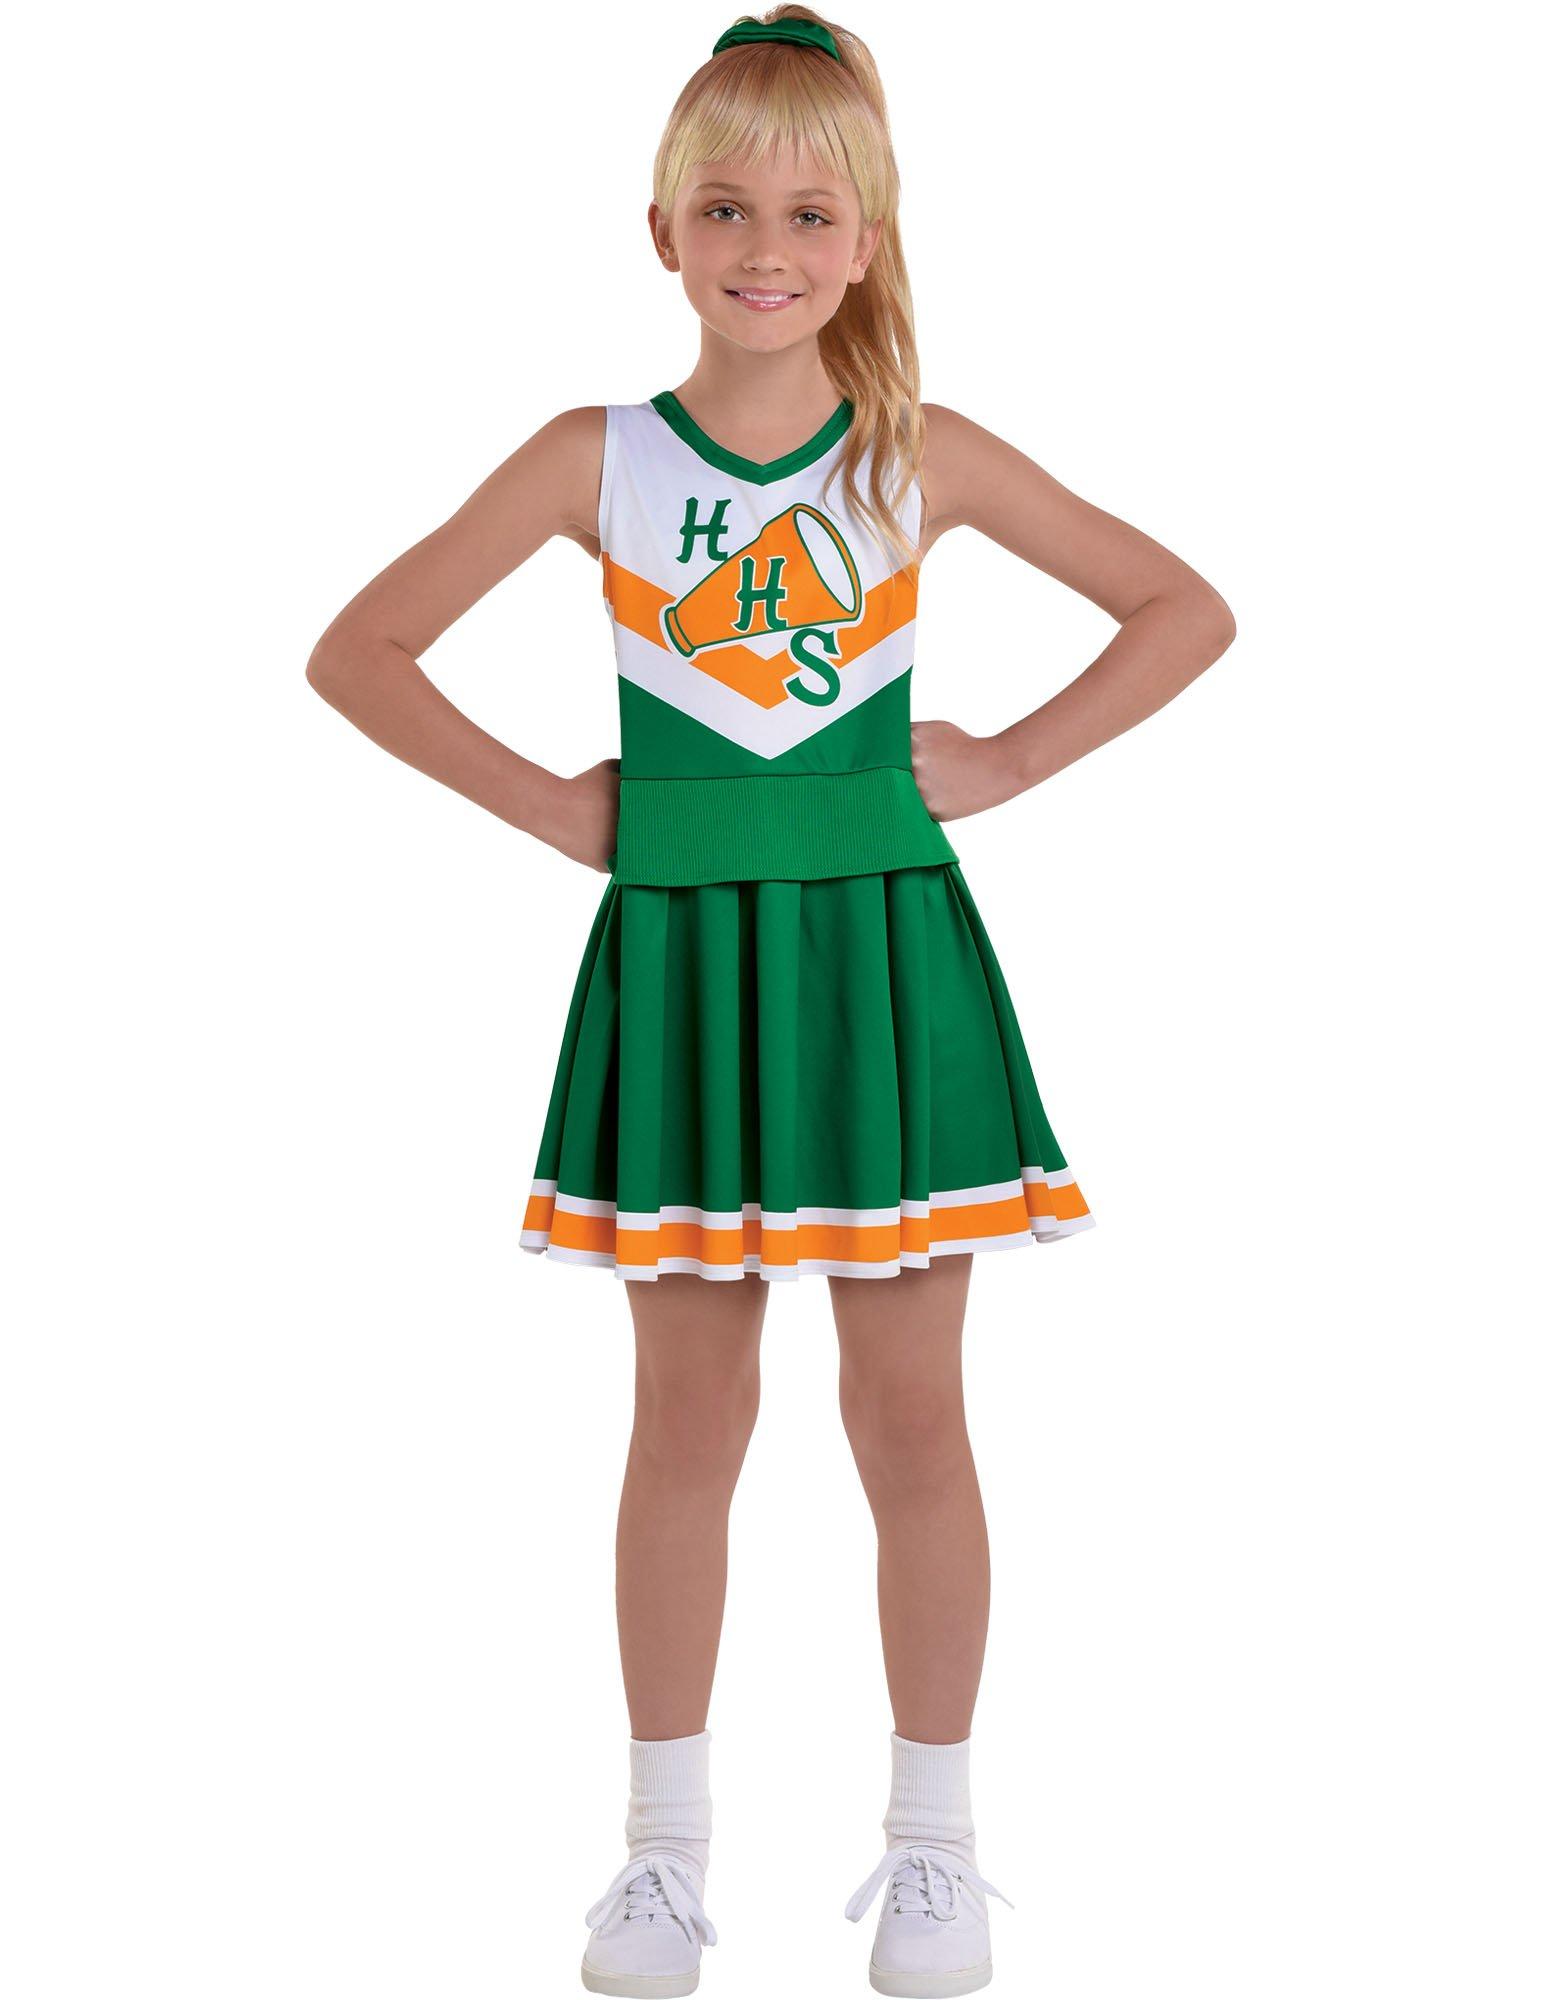 Simple DIY Cheerleader Halloween Costume for Kids